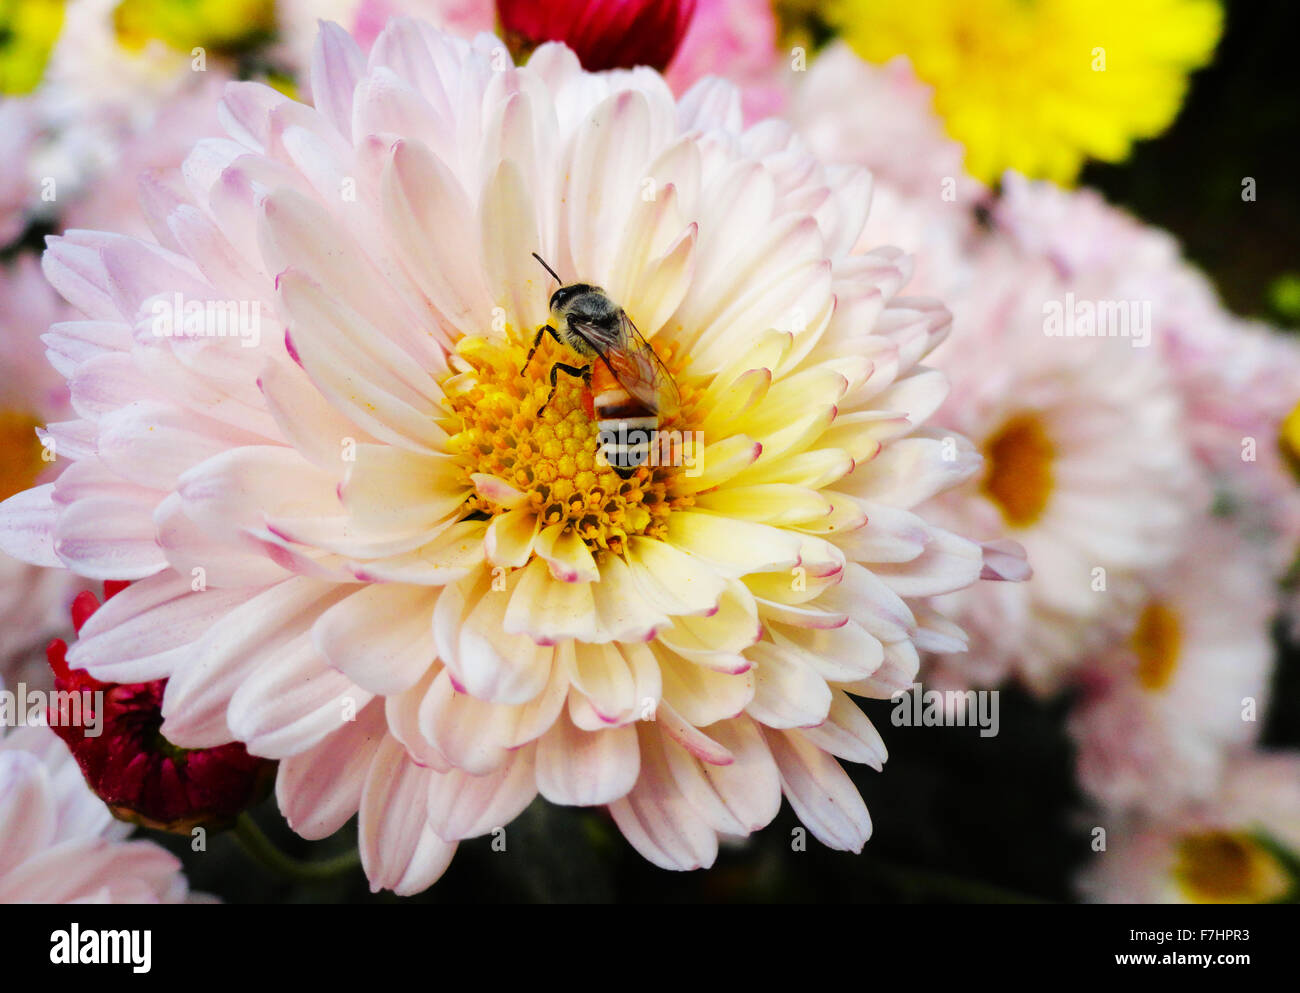 Biene auf rosa Gänseblümchen Blume Stockfoto